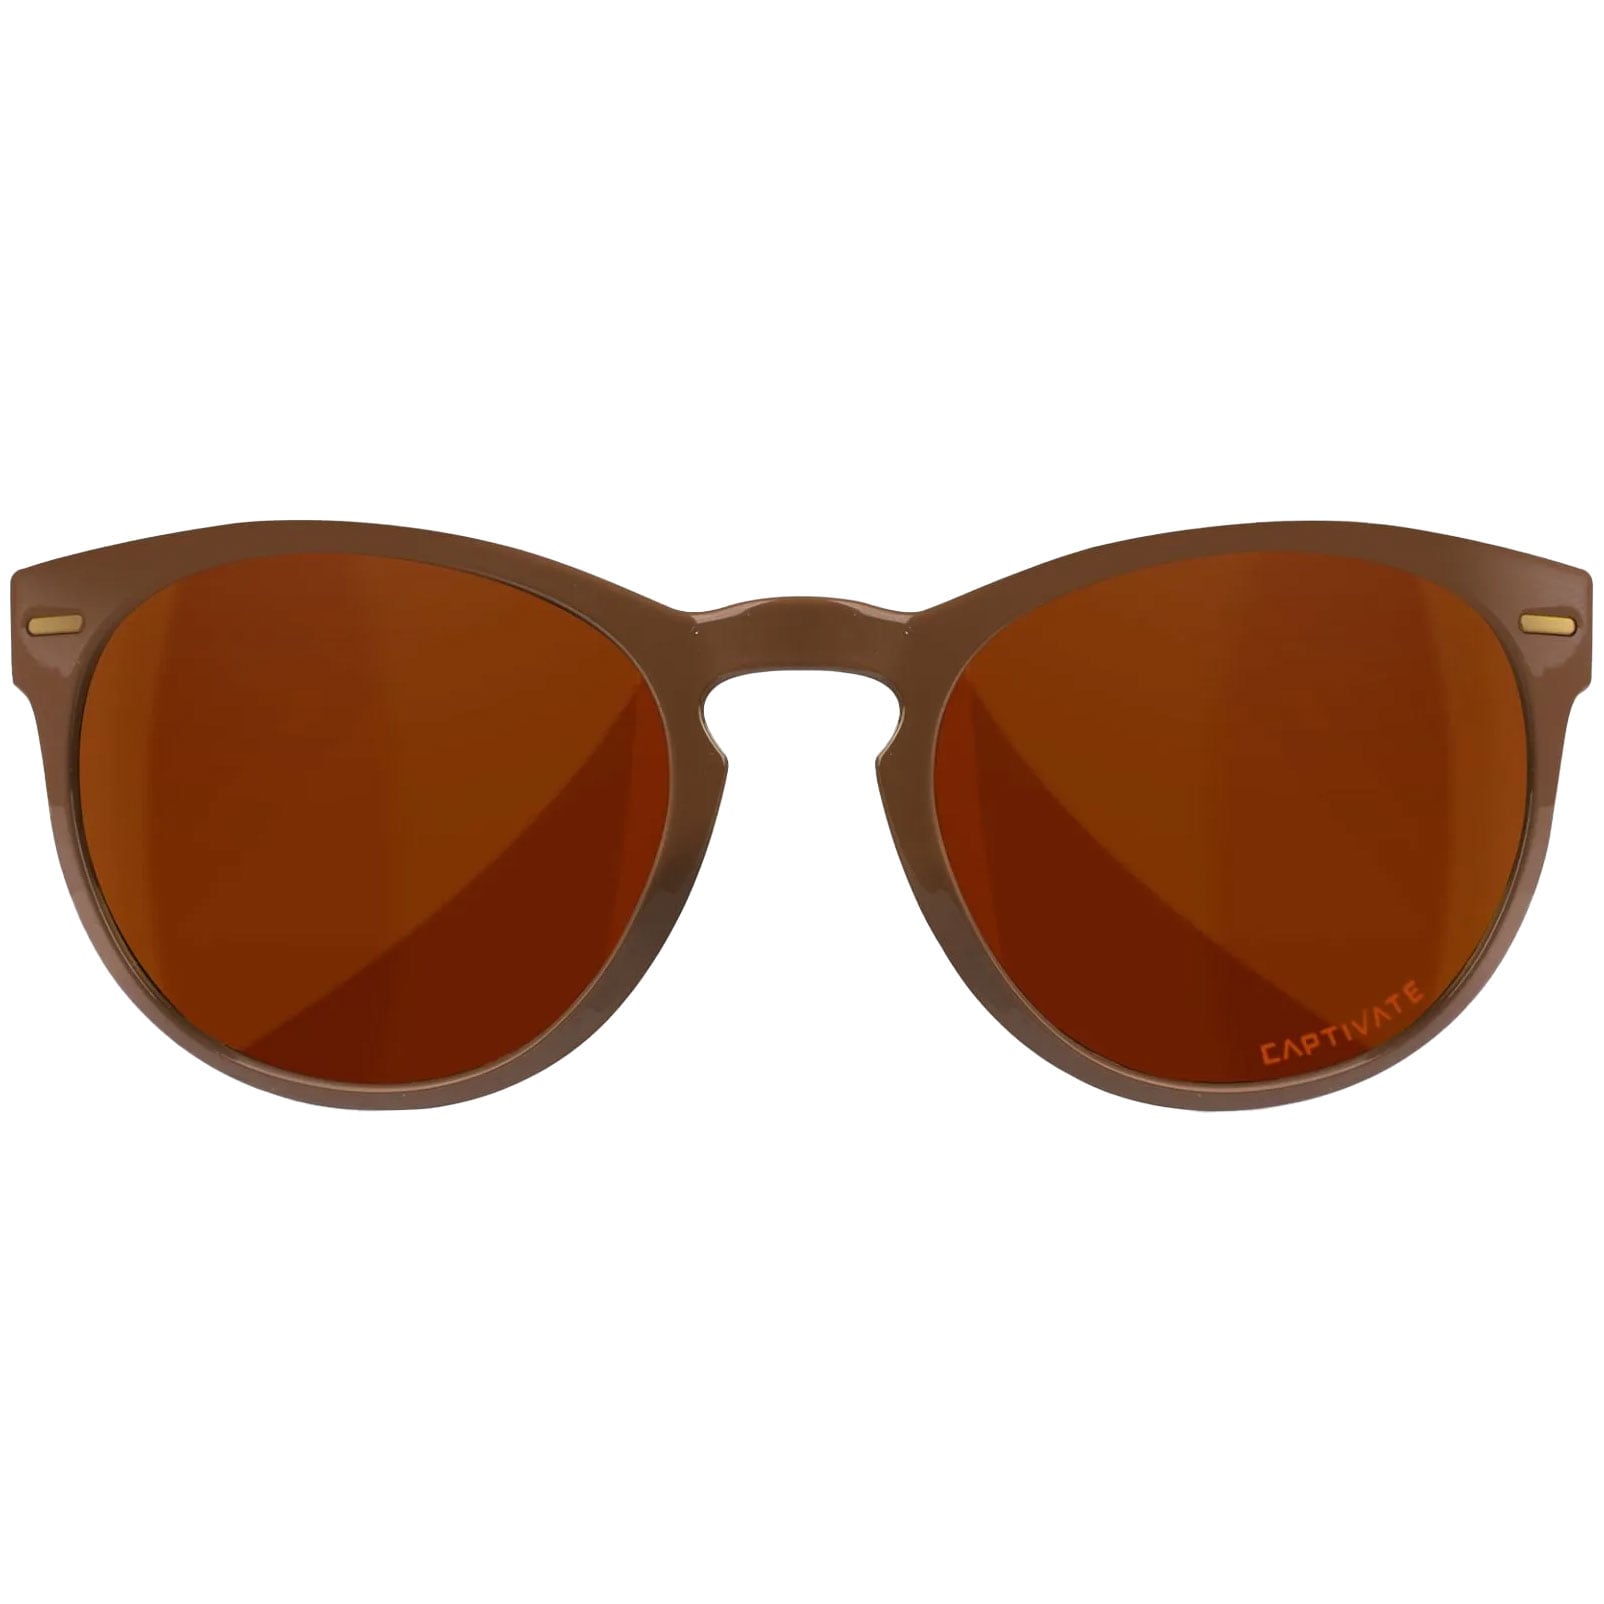 Жіночі окуляри Wiley X Covert - Captivate Polarized Copper/ Gloss Coffee Crystal Brown